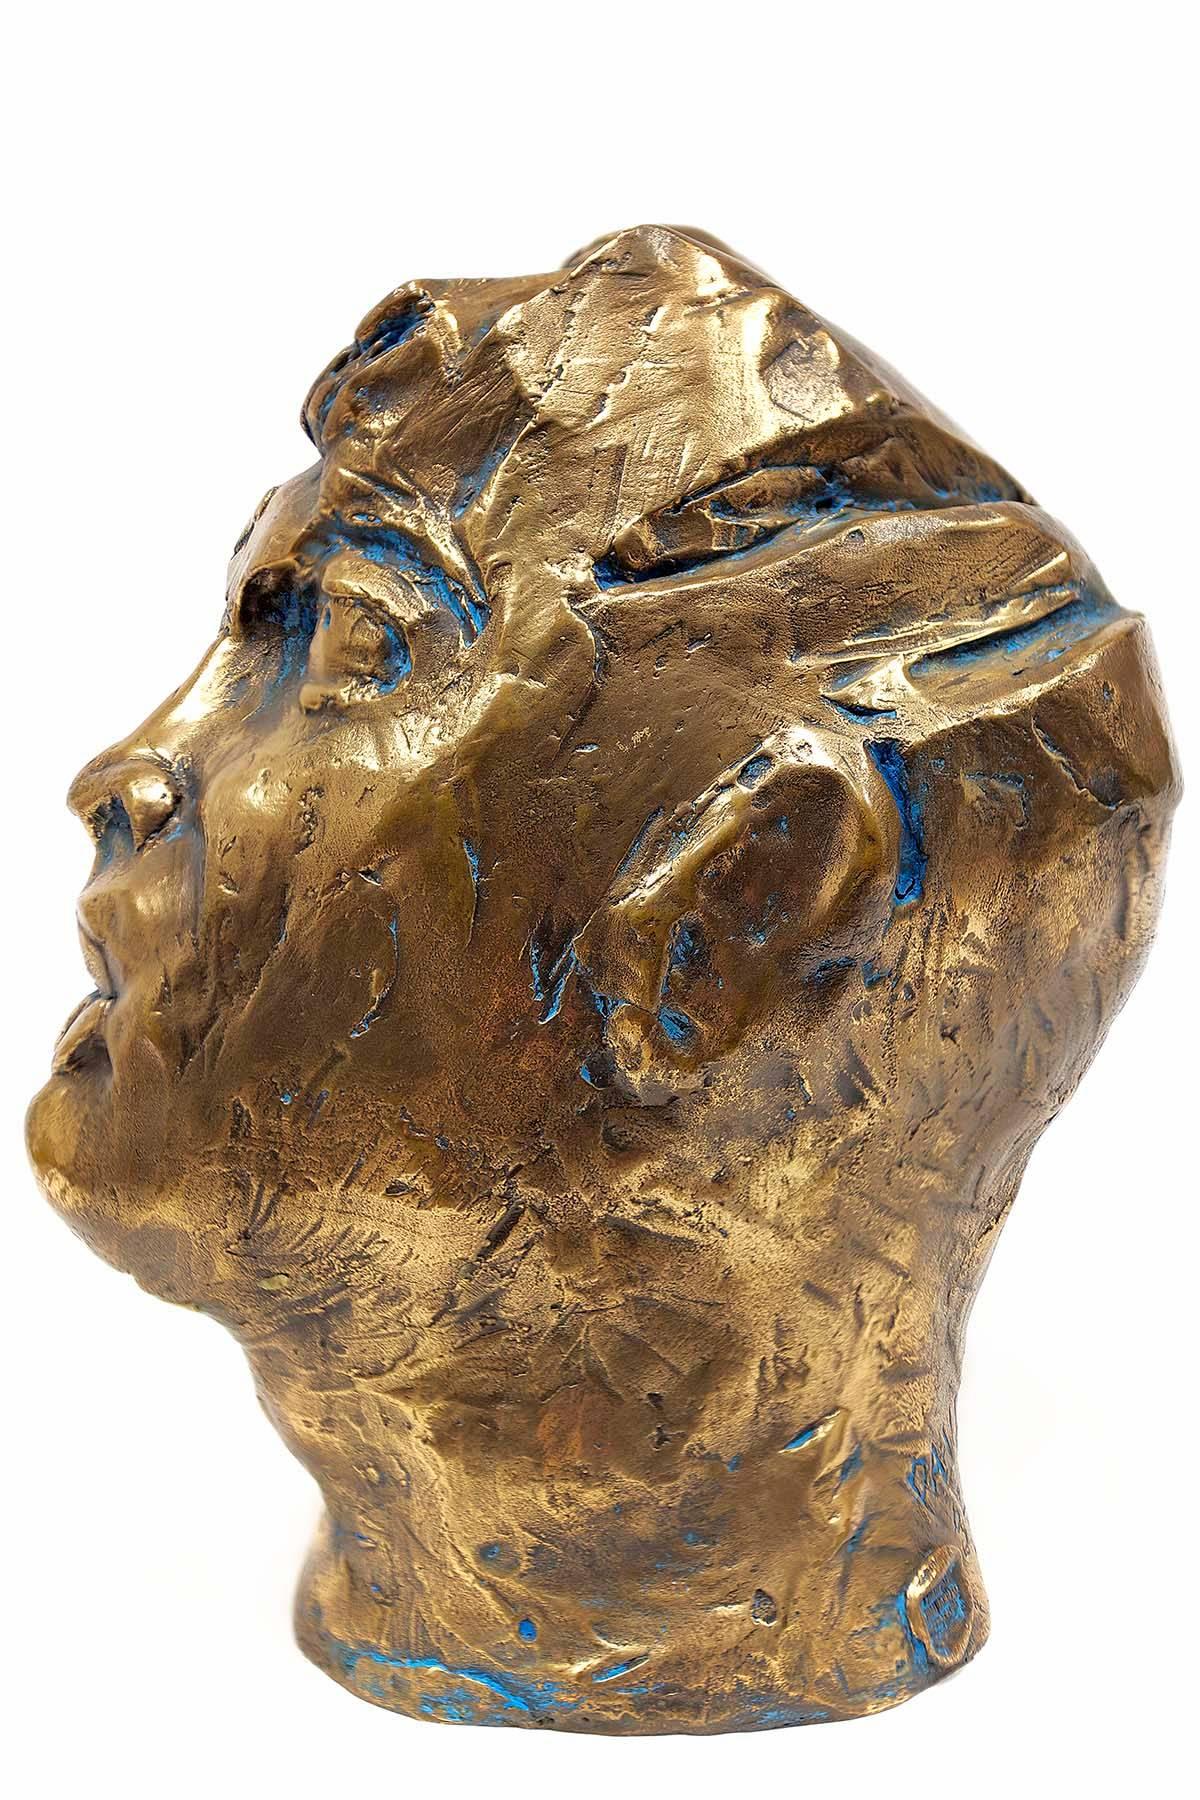 flora goldberg sculpture price